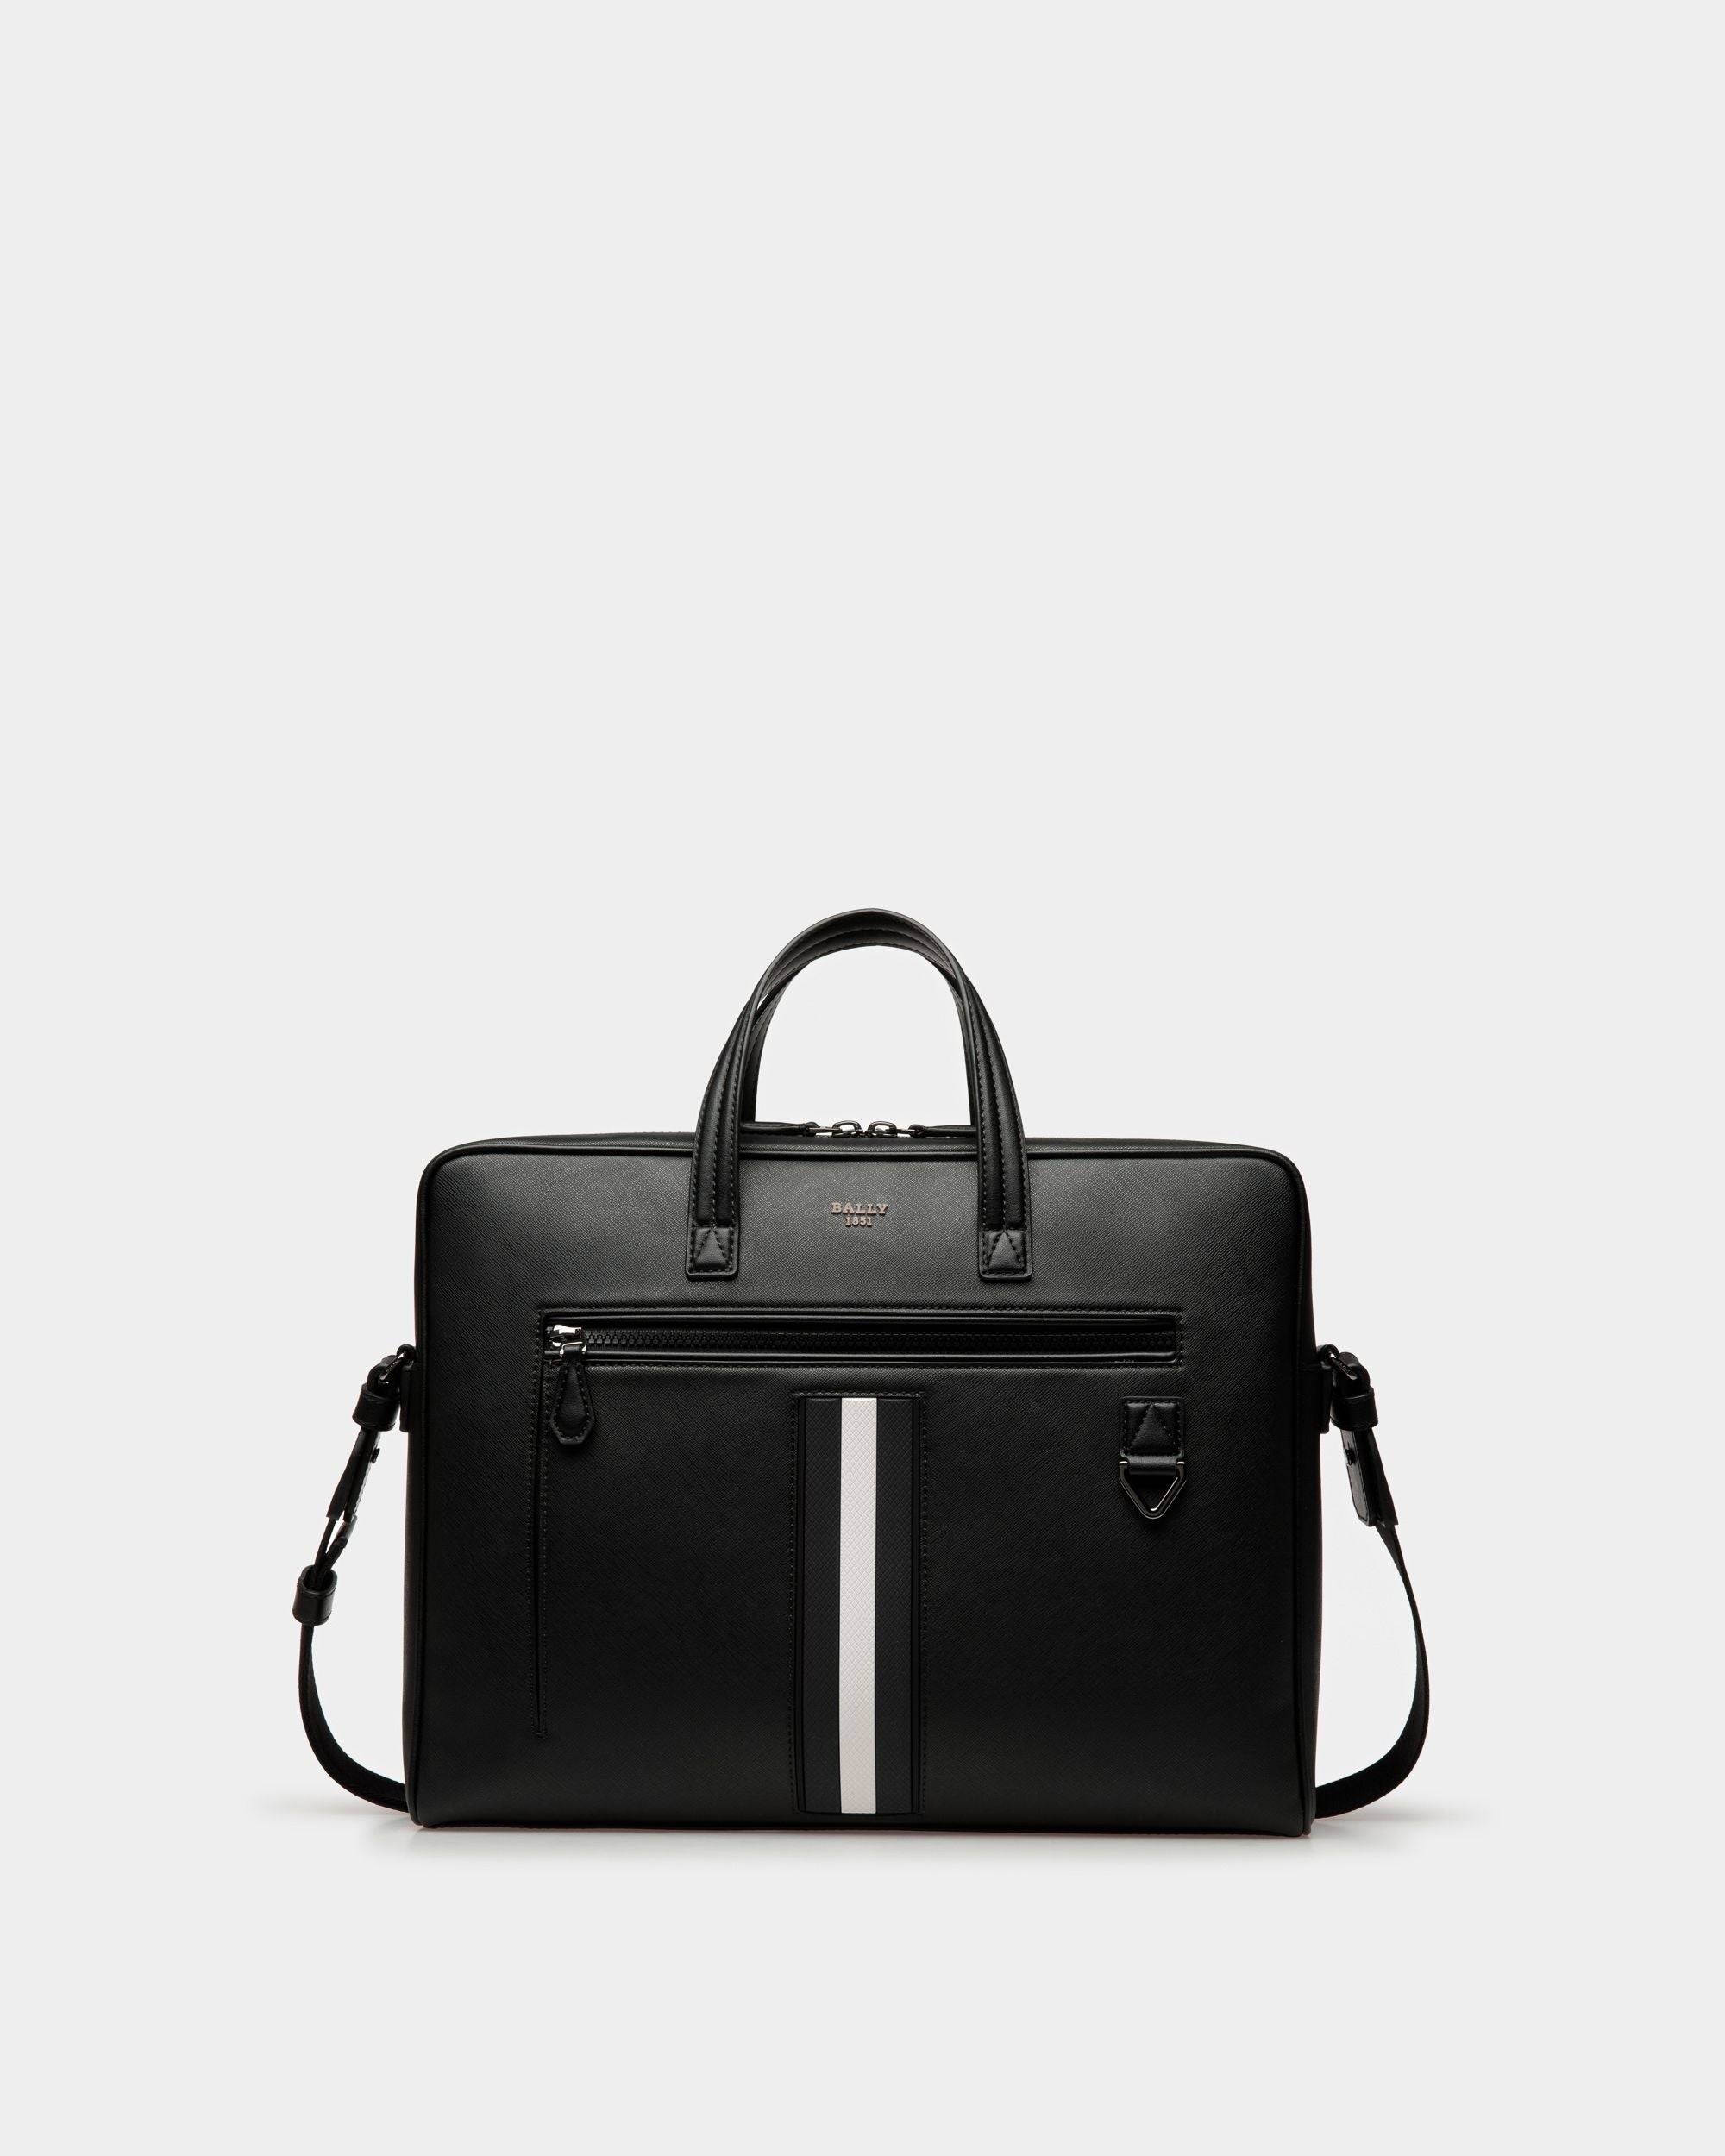 Men's Mythos Business Bag In Black Leather | Bally | Still Life Front